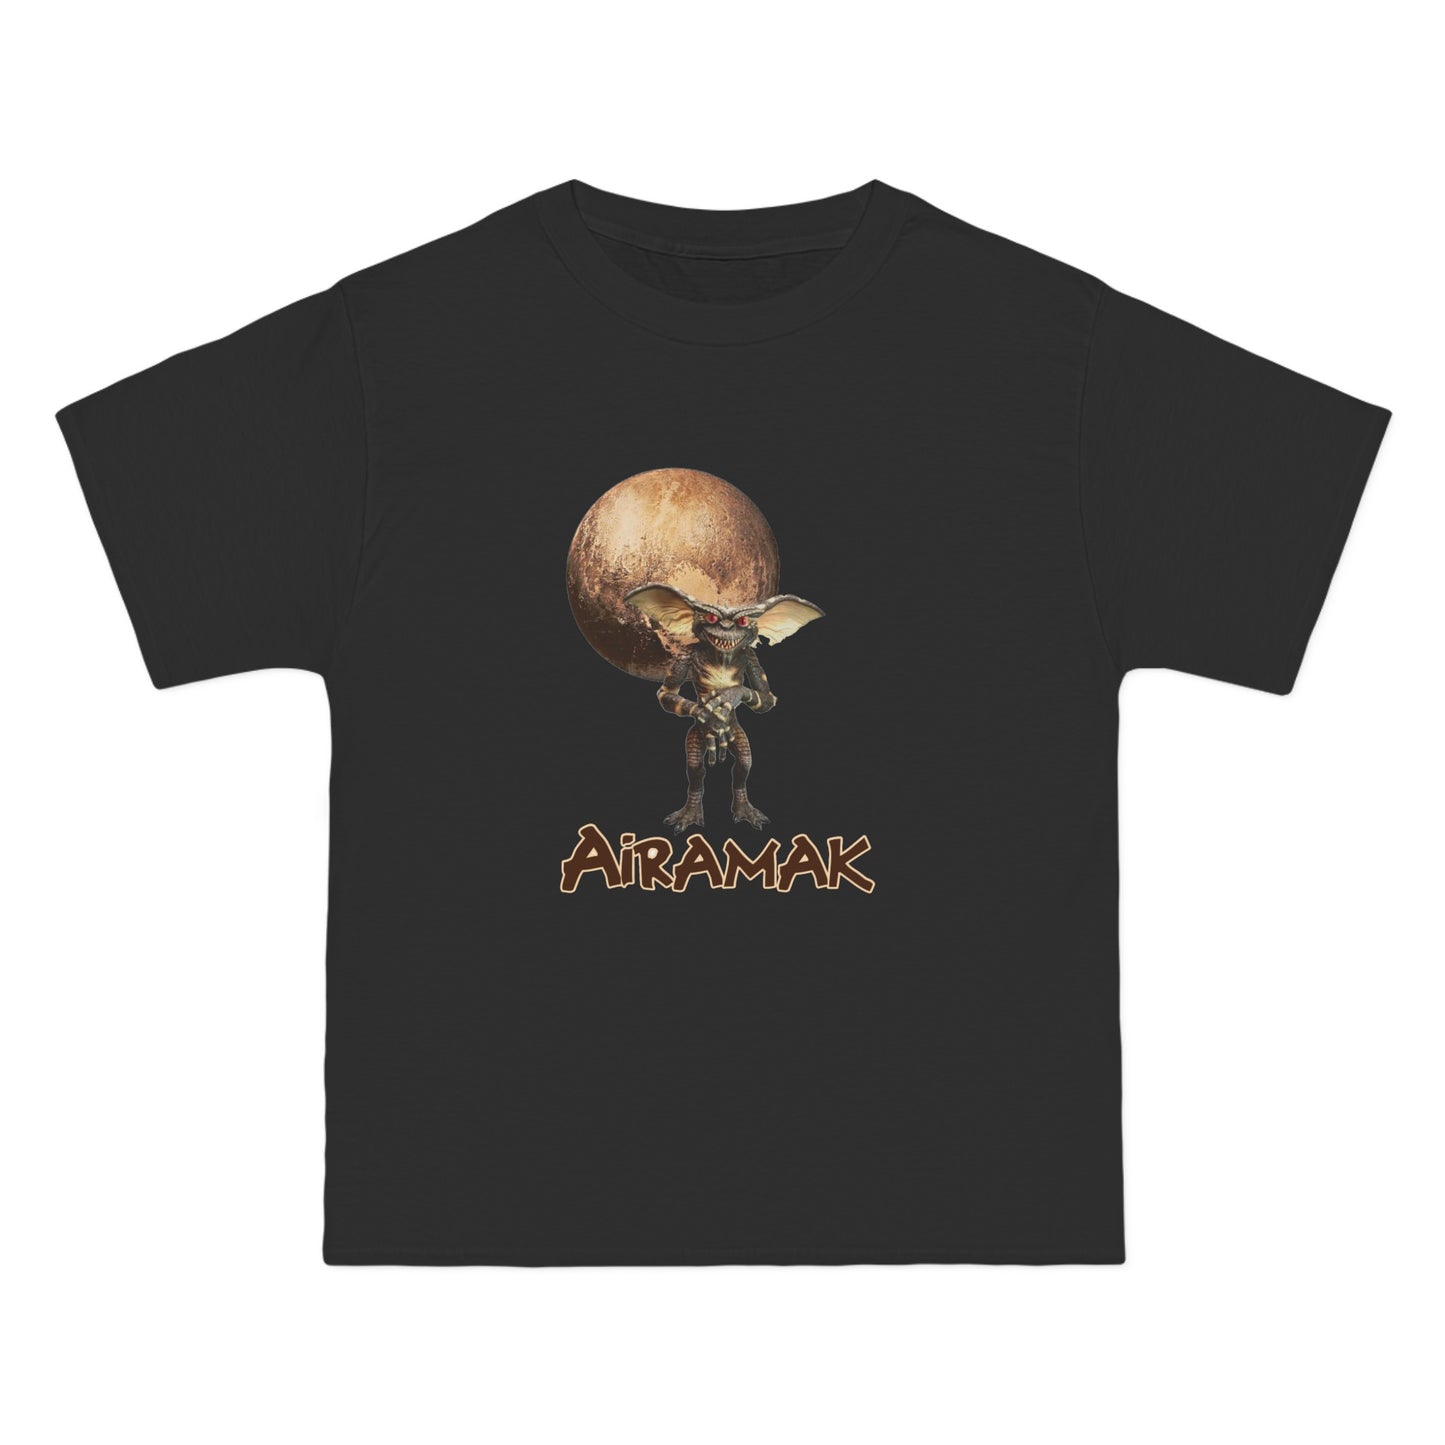 Goblin T-Shirt